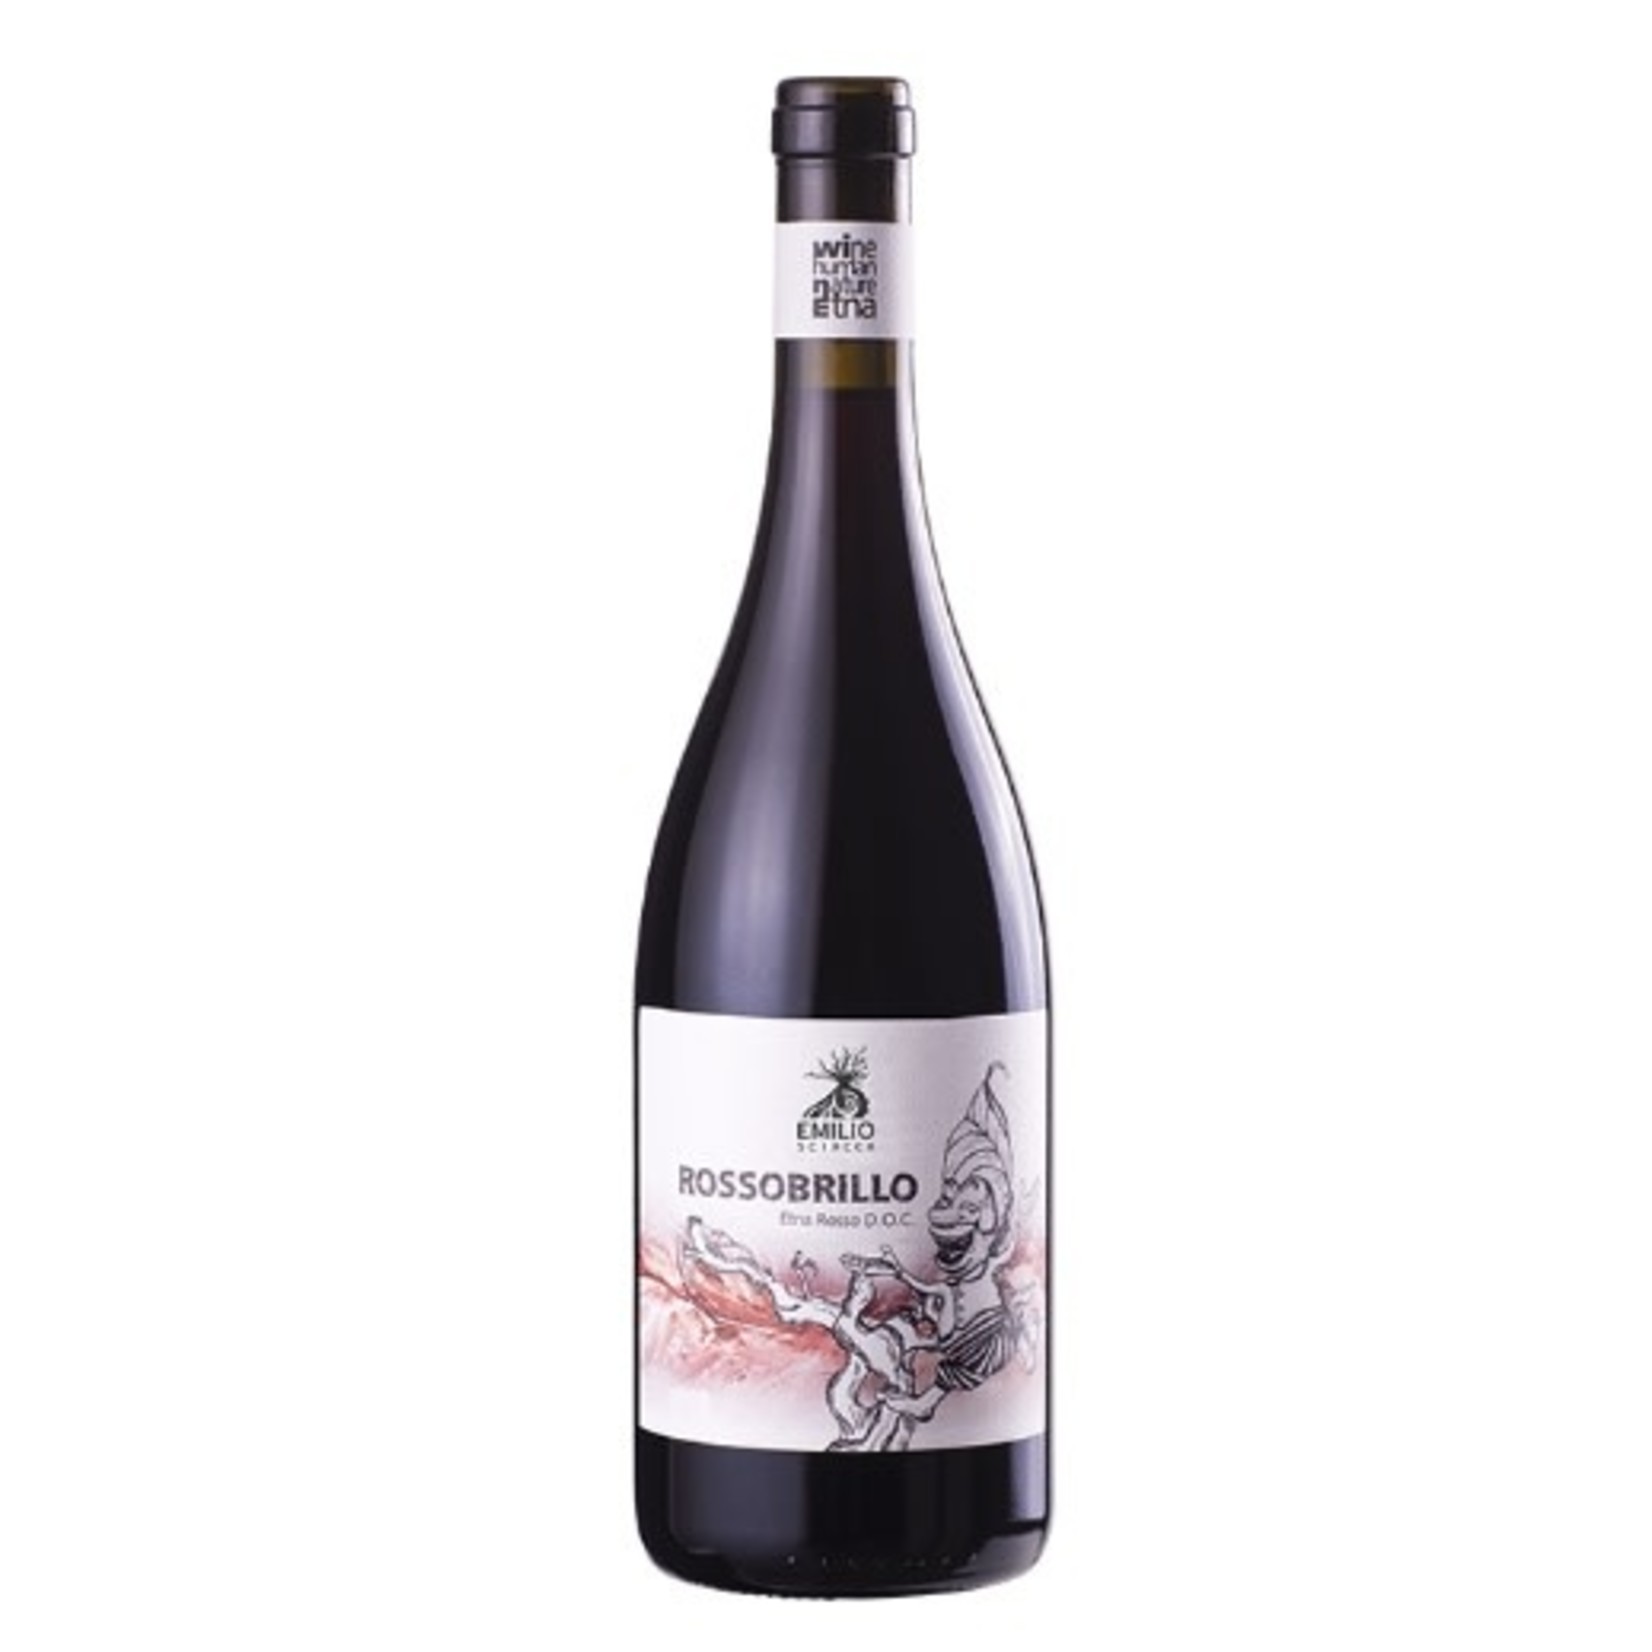 Wine Emilio Sciacca Rossobrillo Etna Rosso 2019